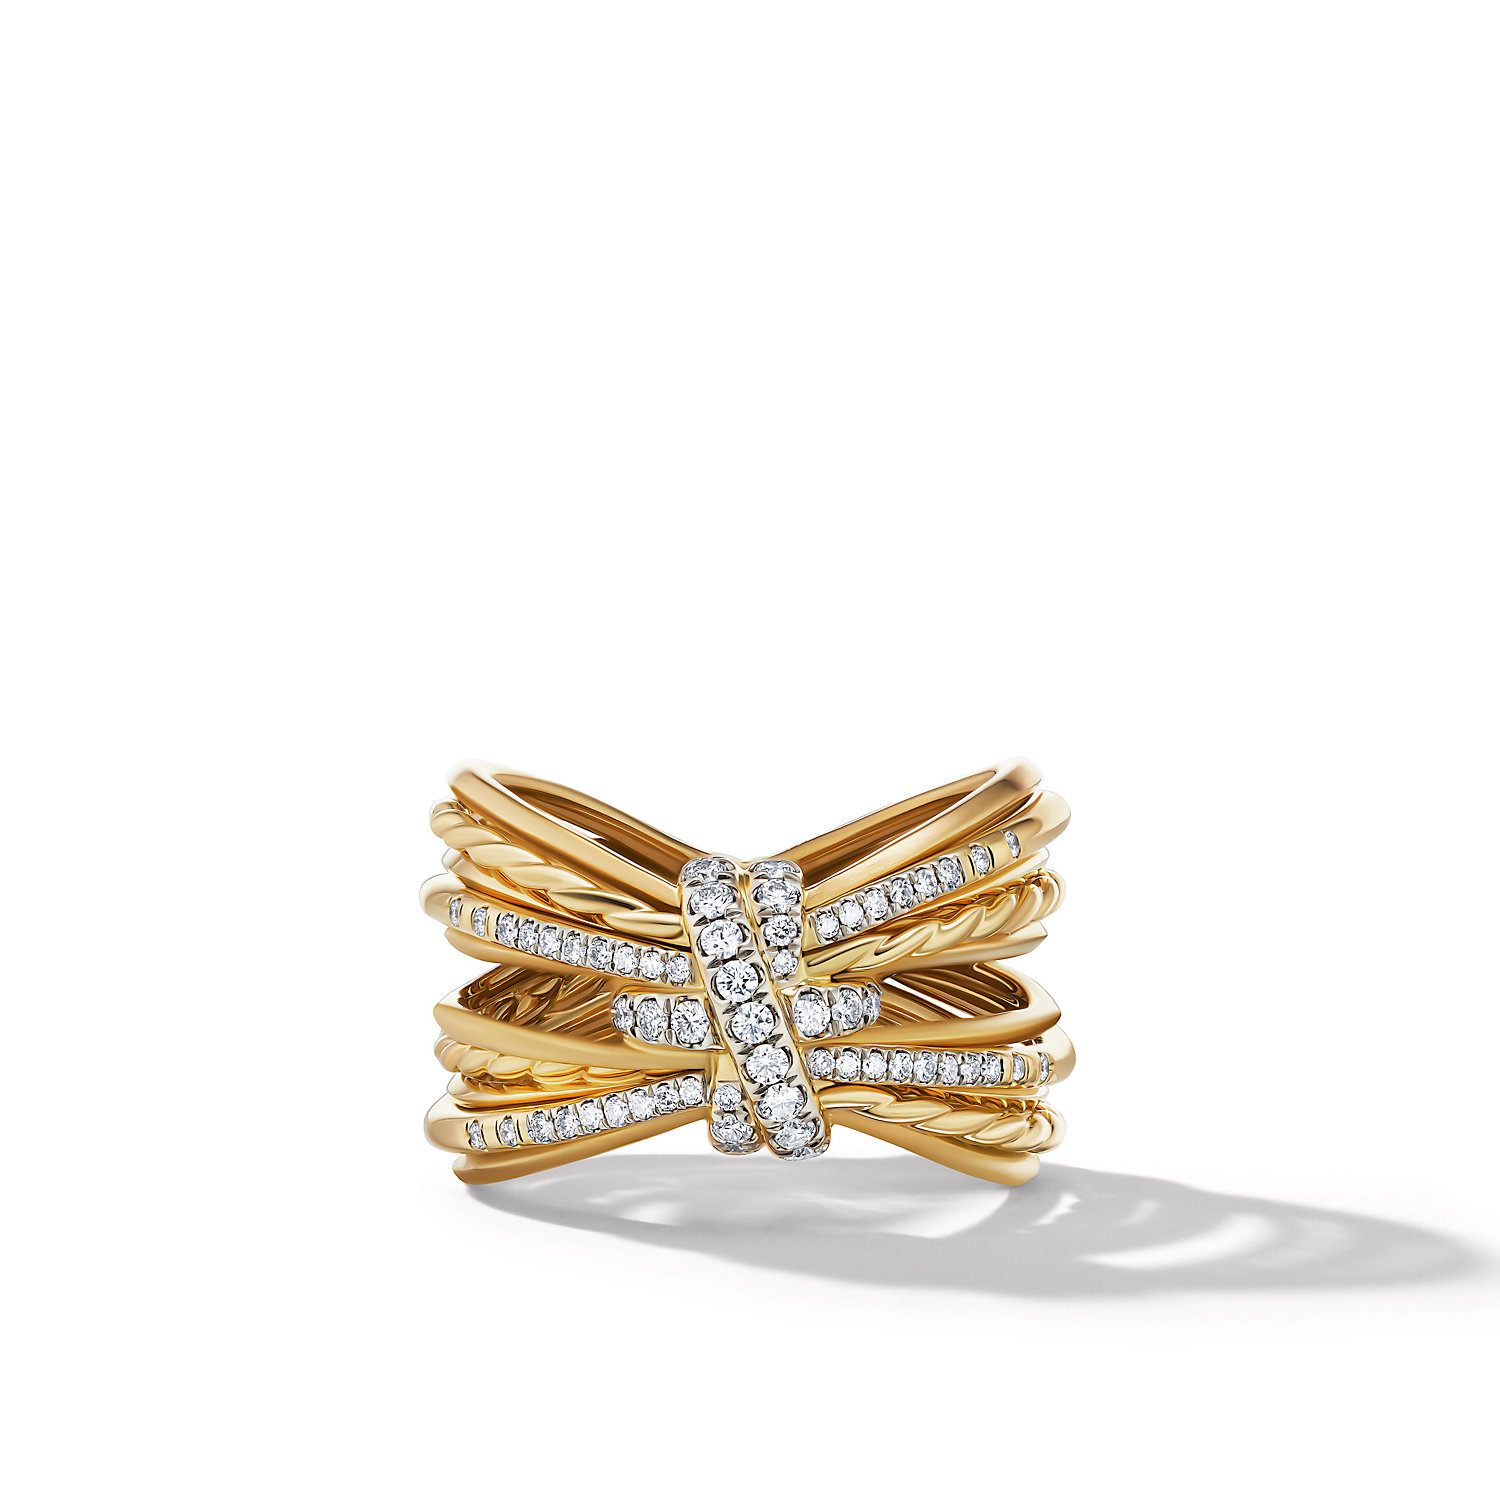 David Yurman Angelika Maltese Ring in 18K Yellow Gold with Pave Diamonds 1